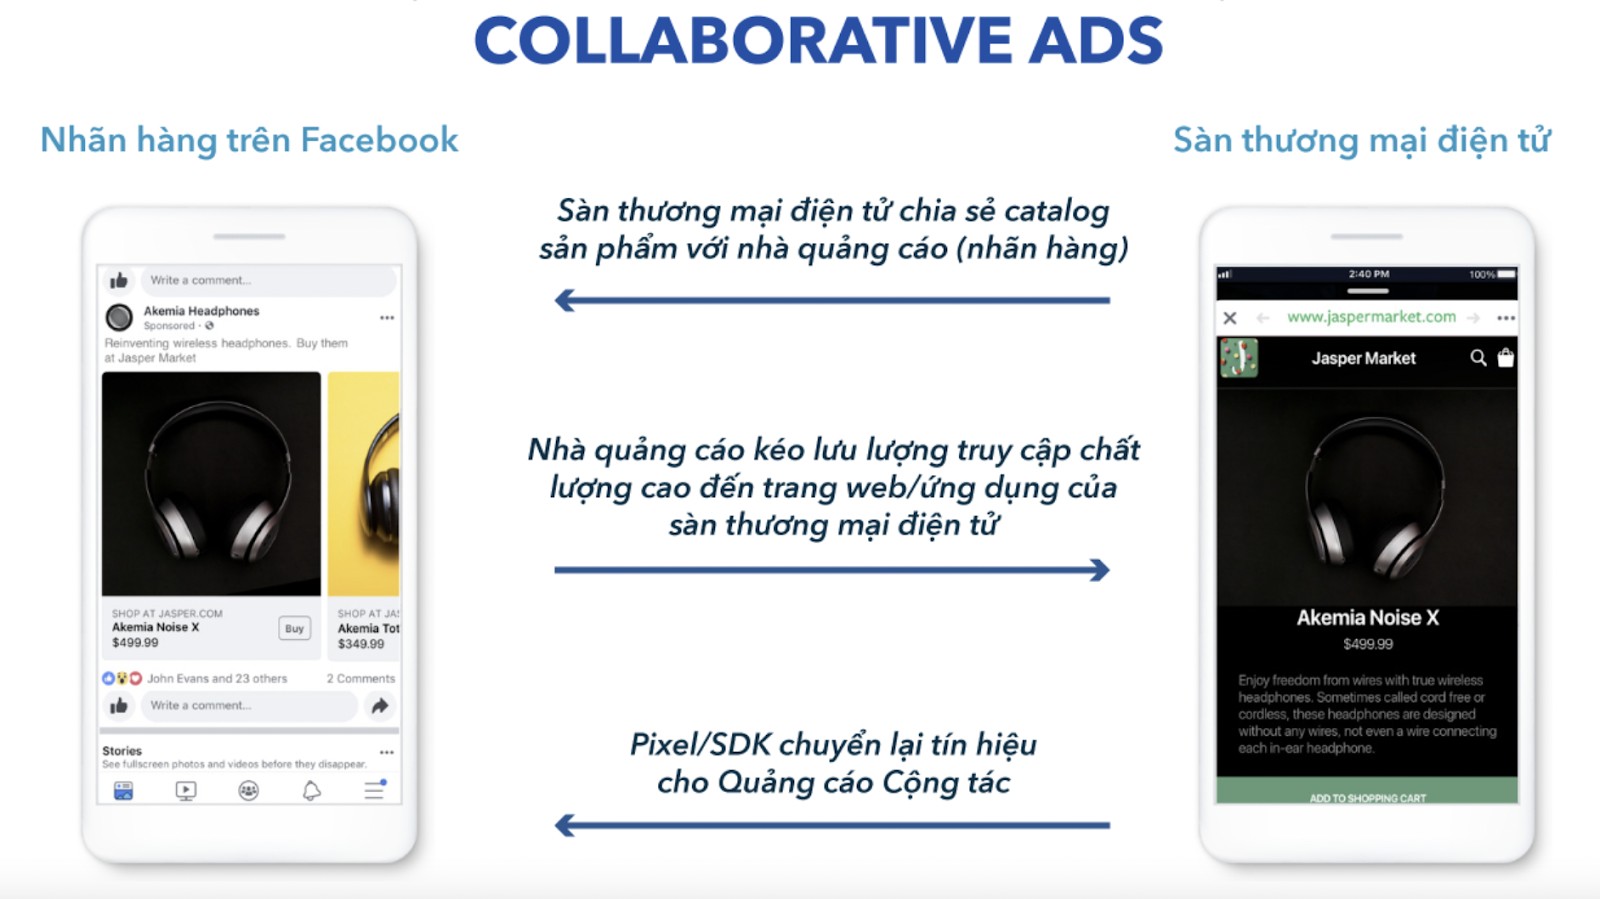 Facebook CPAS Collaborative Ads